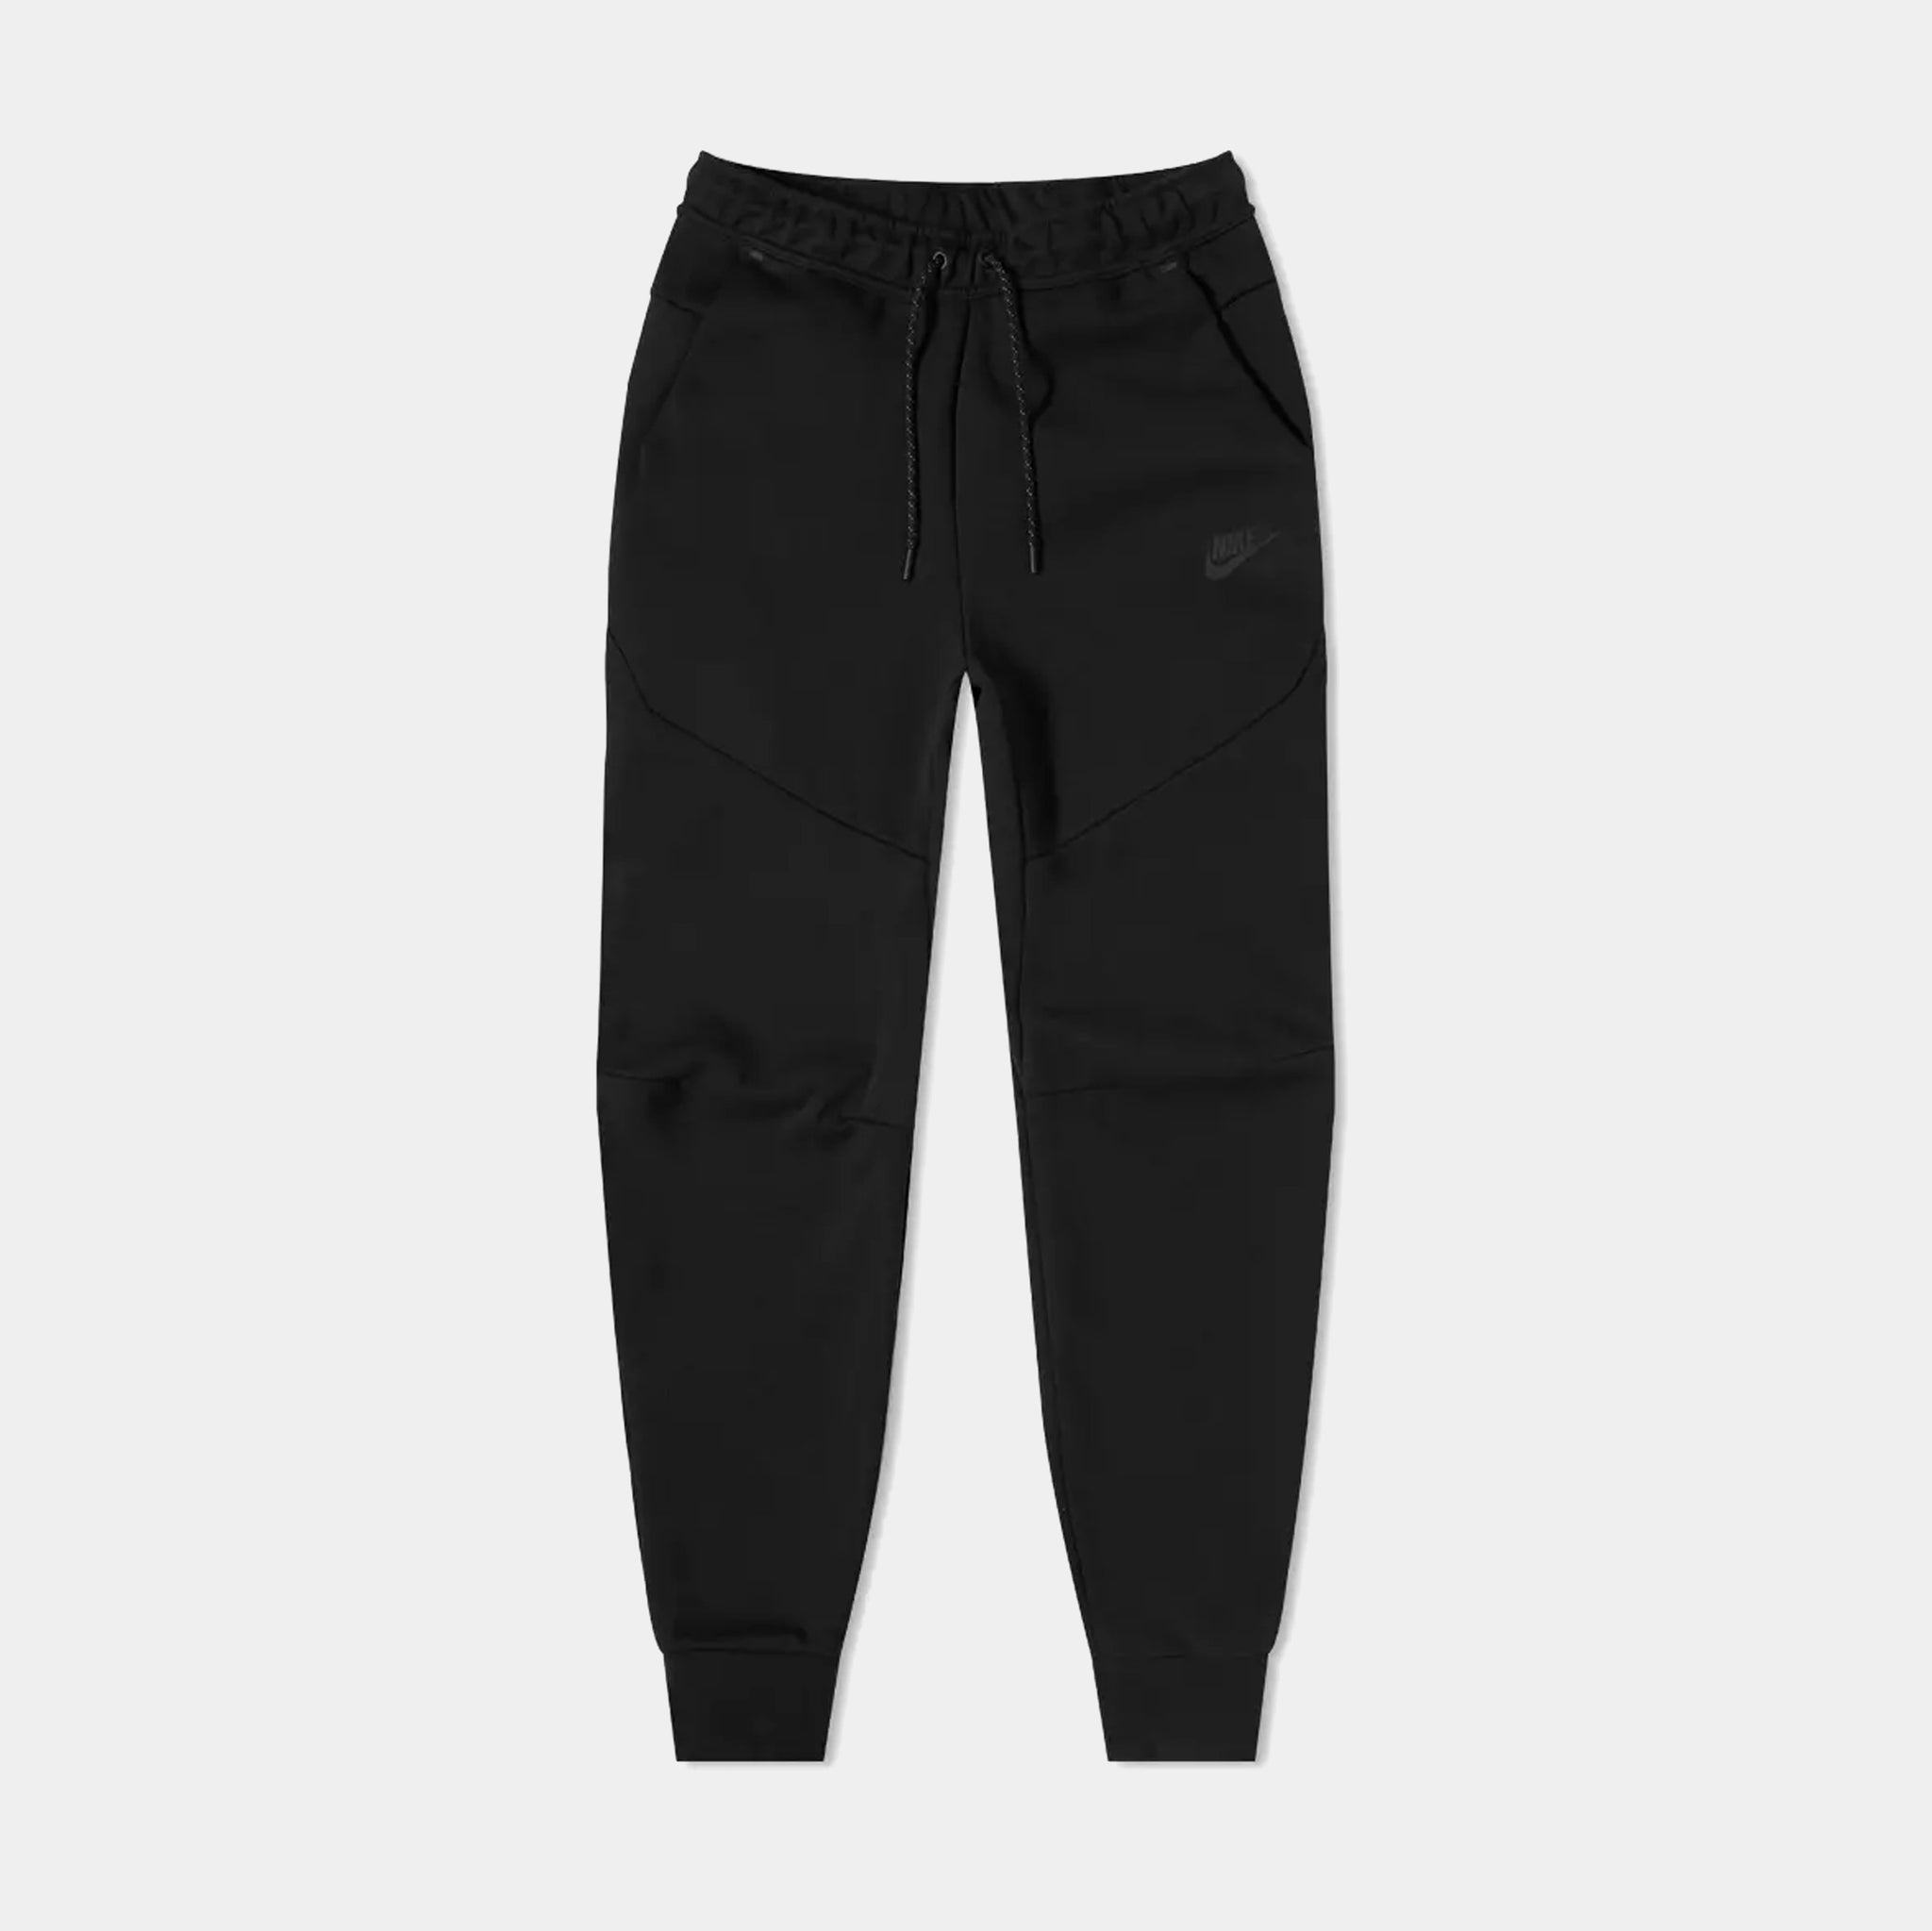 Men's Black Linen Drawstring Pants - Loose Fit = Island Importer